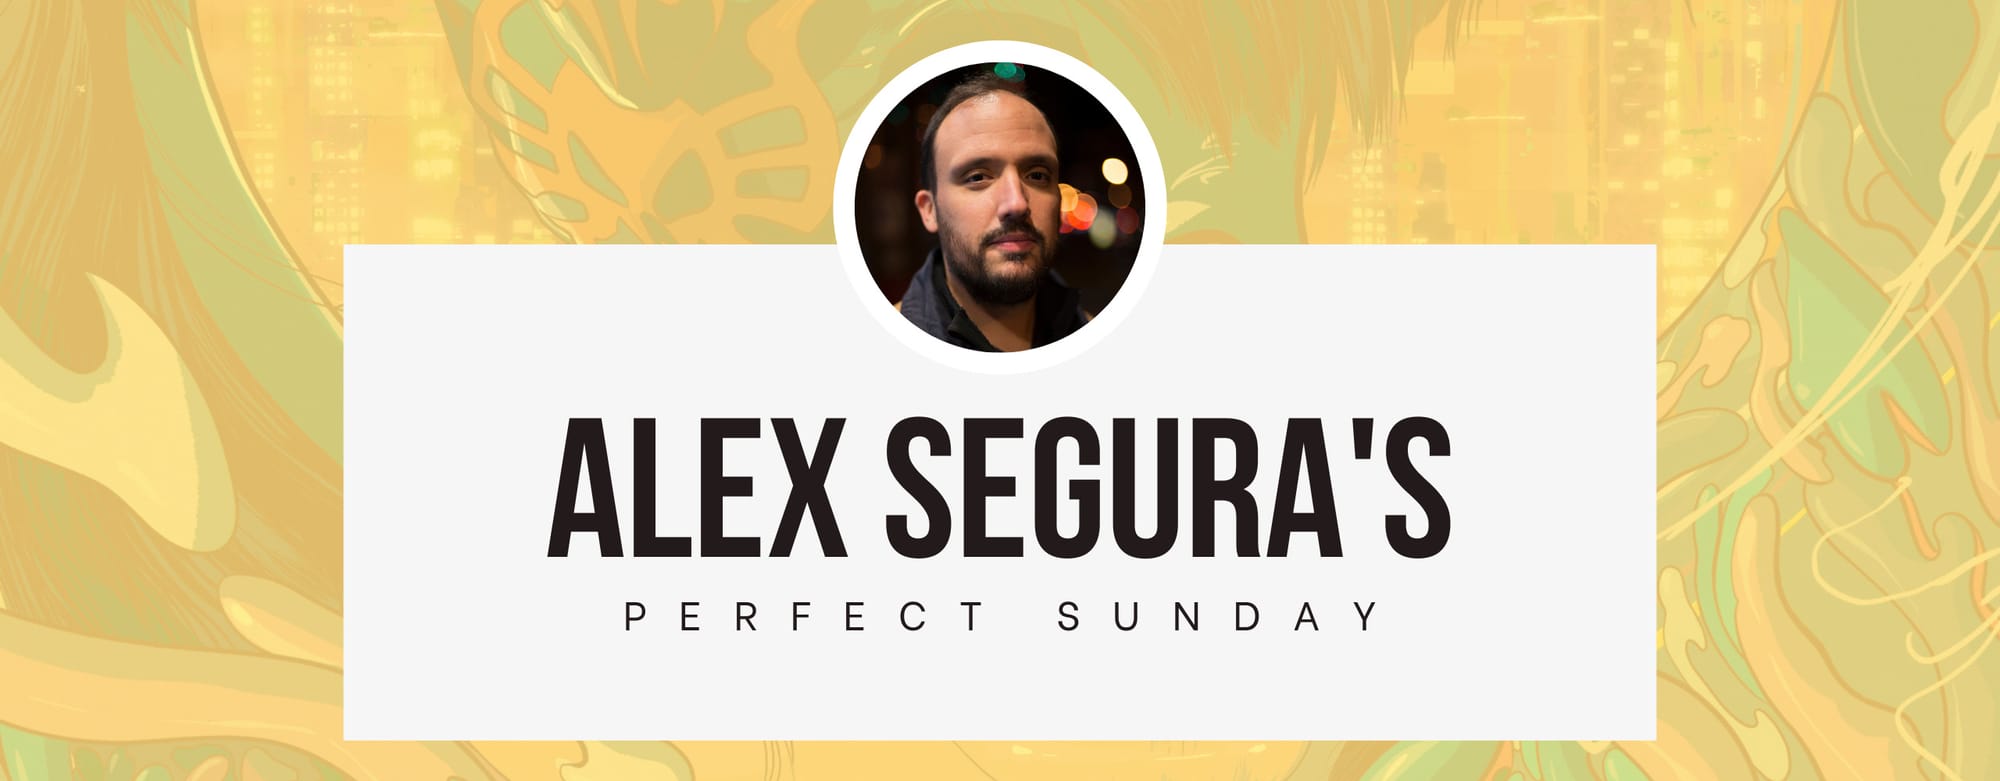 A perfect Sunday with... Alex Segura